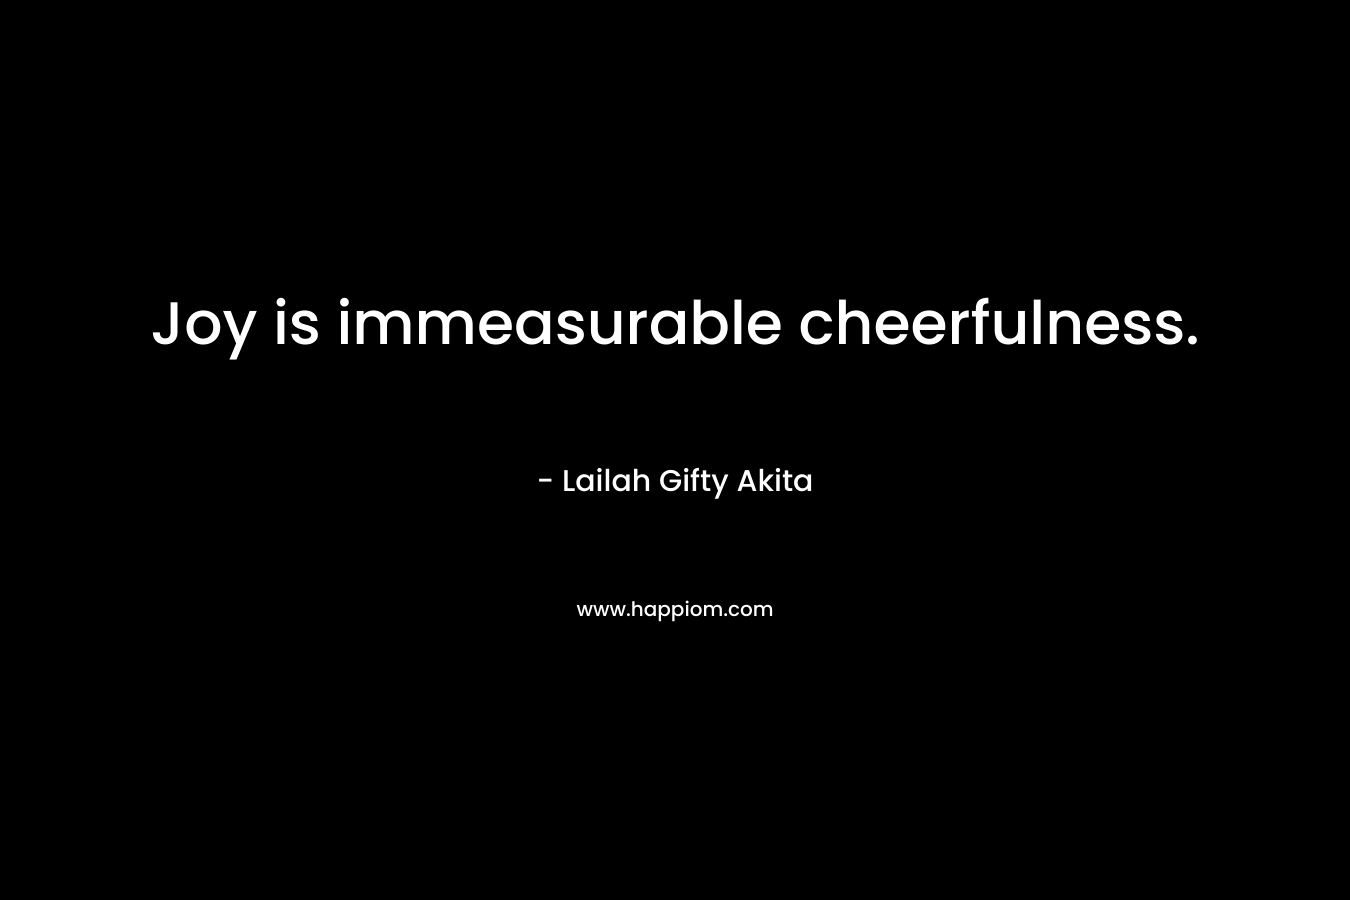 Joy is immeasurable cheerfulness.